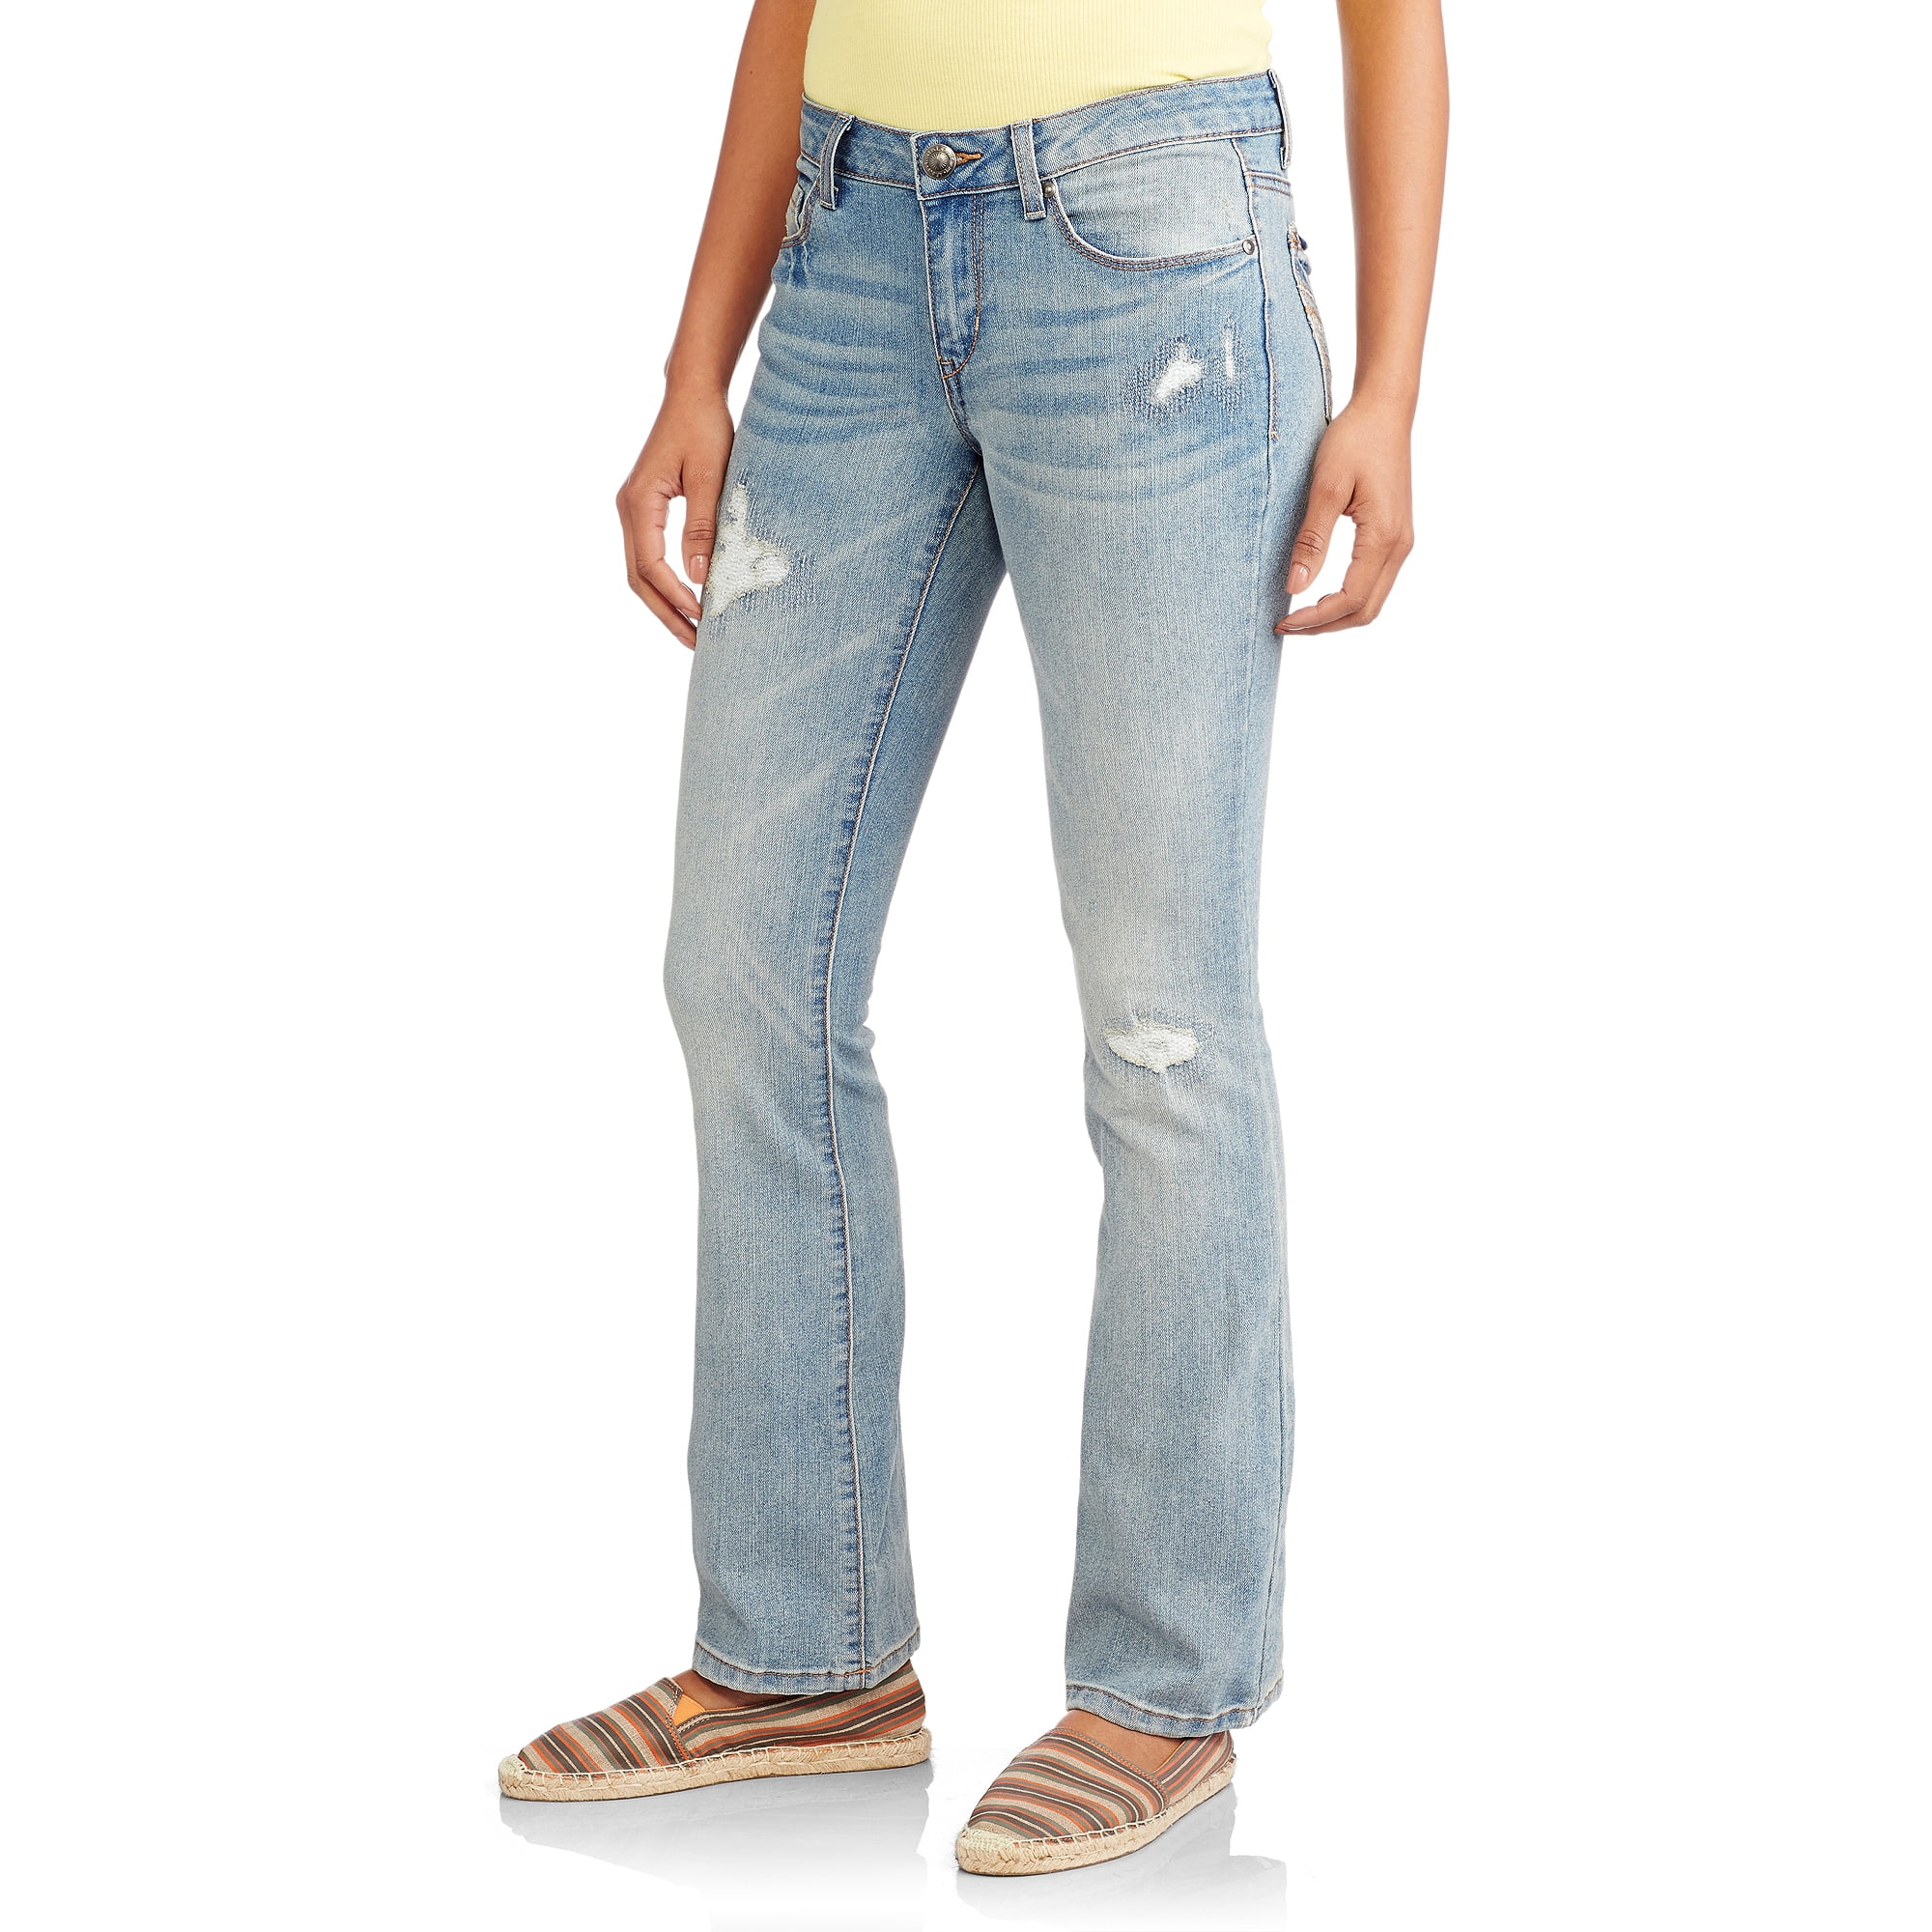 lei ashley jeans size 17